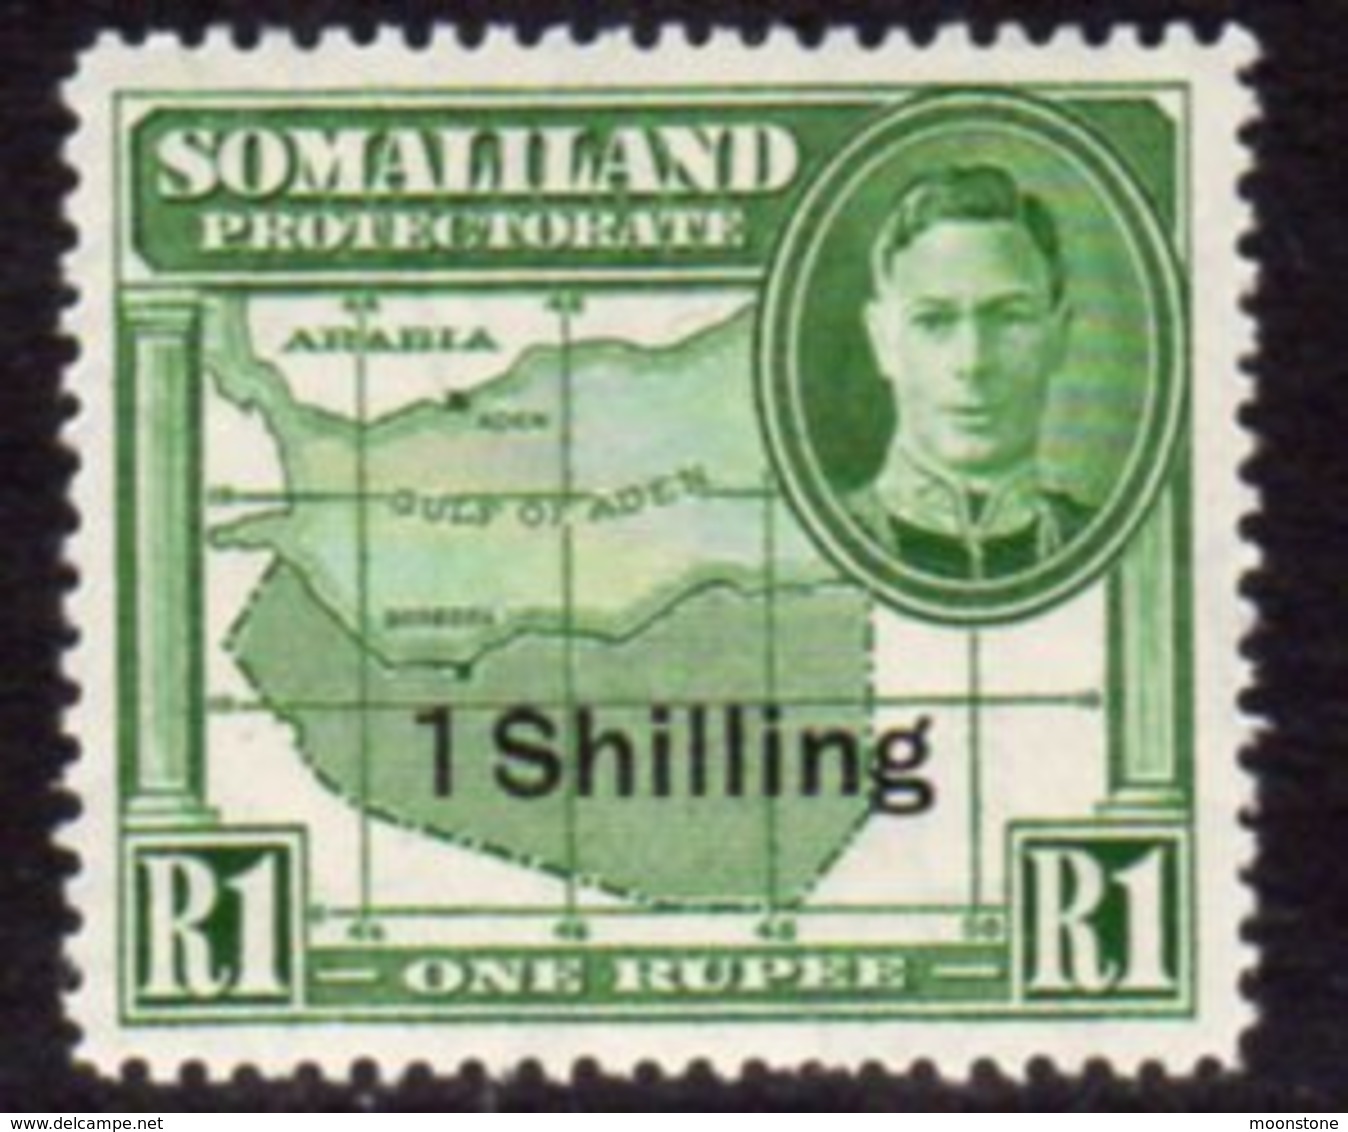 British Somaliland 1951 Definitive Surcharges 1 Shilling On 1 Rupee Value, MNH, SG 132 (BA) - Somaliland (Protectorate ...-1959)